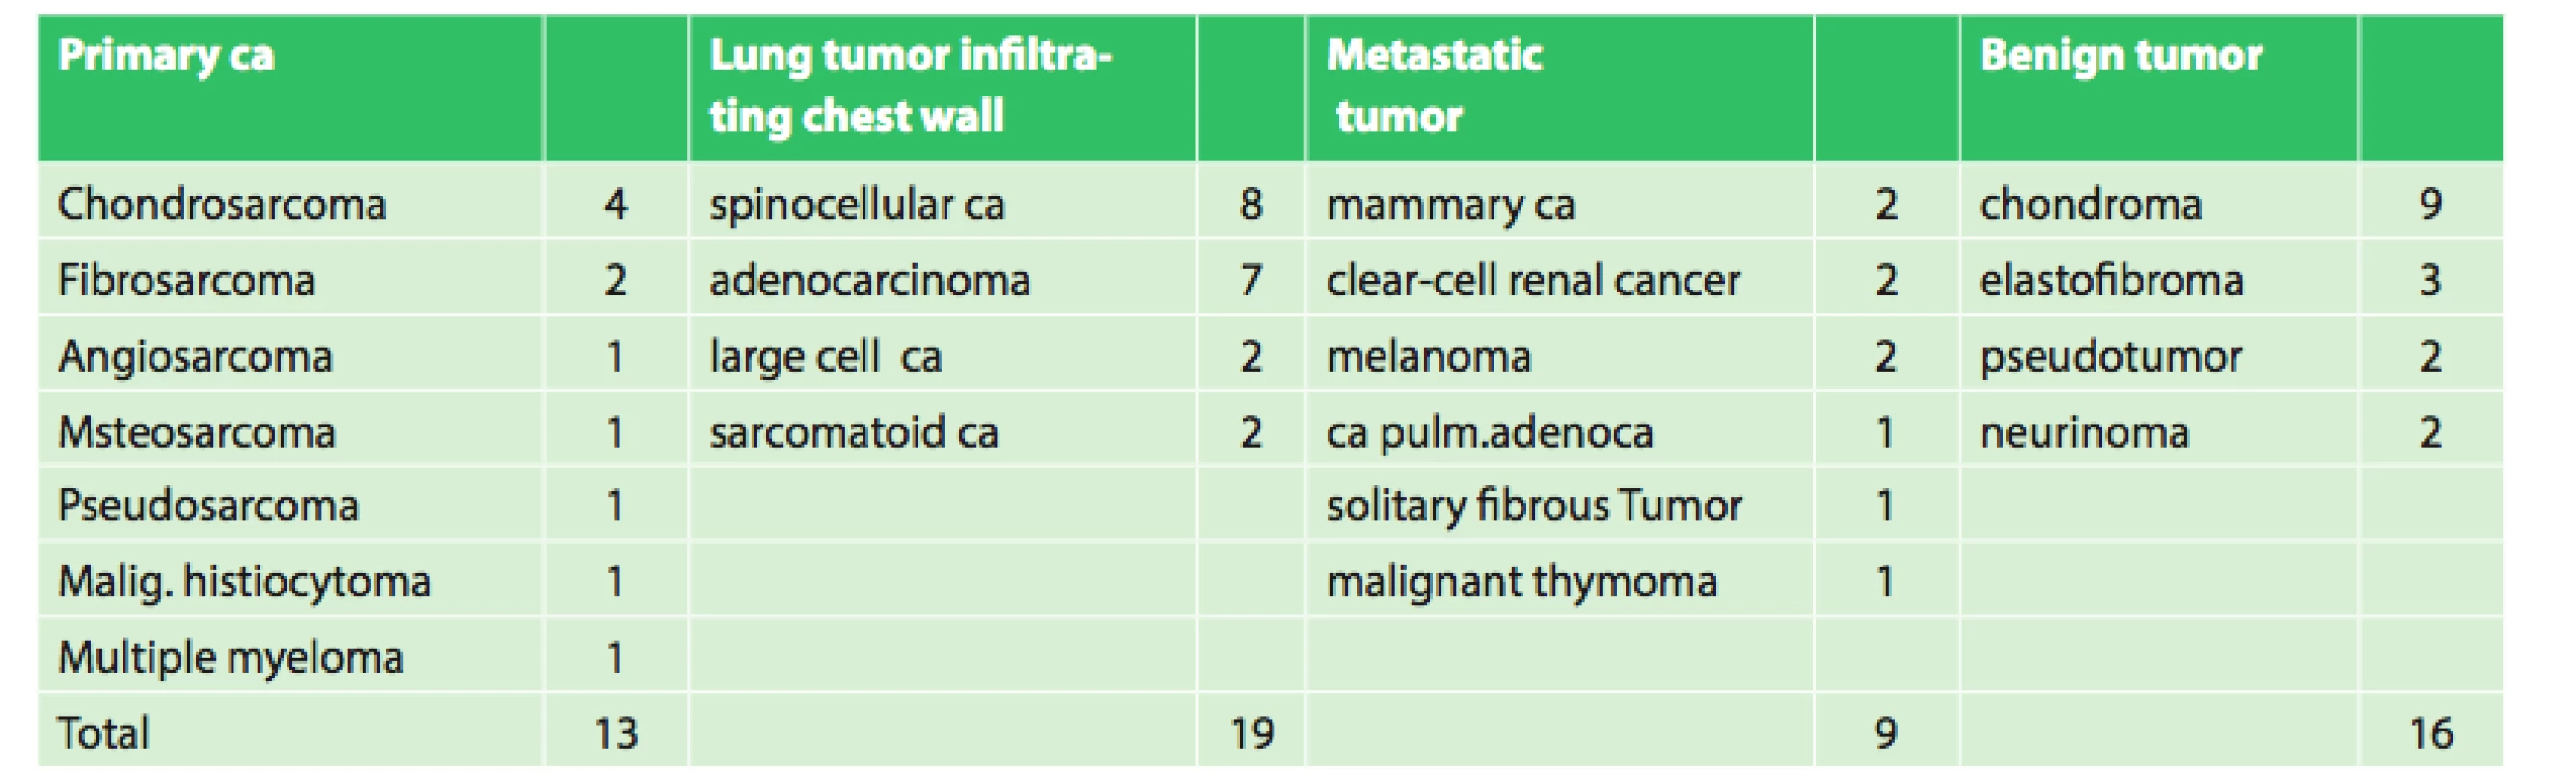 Tumor types